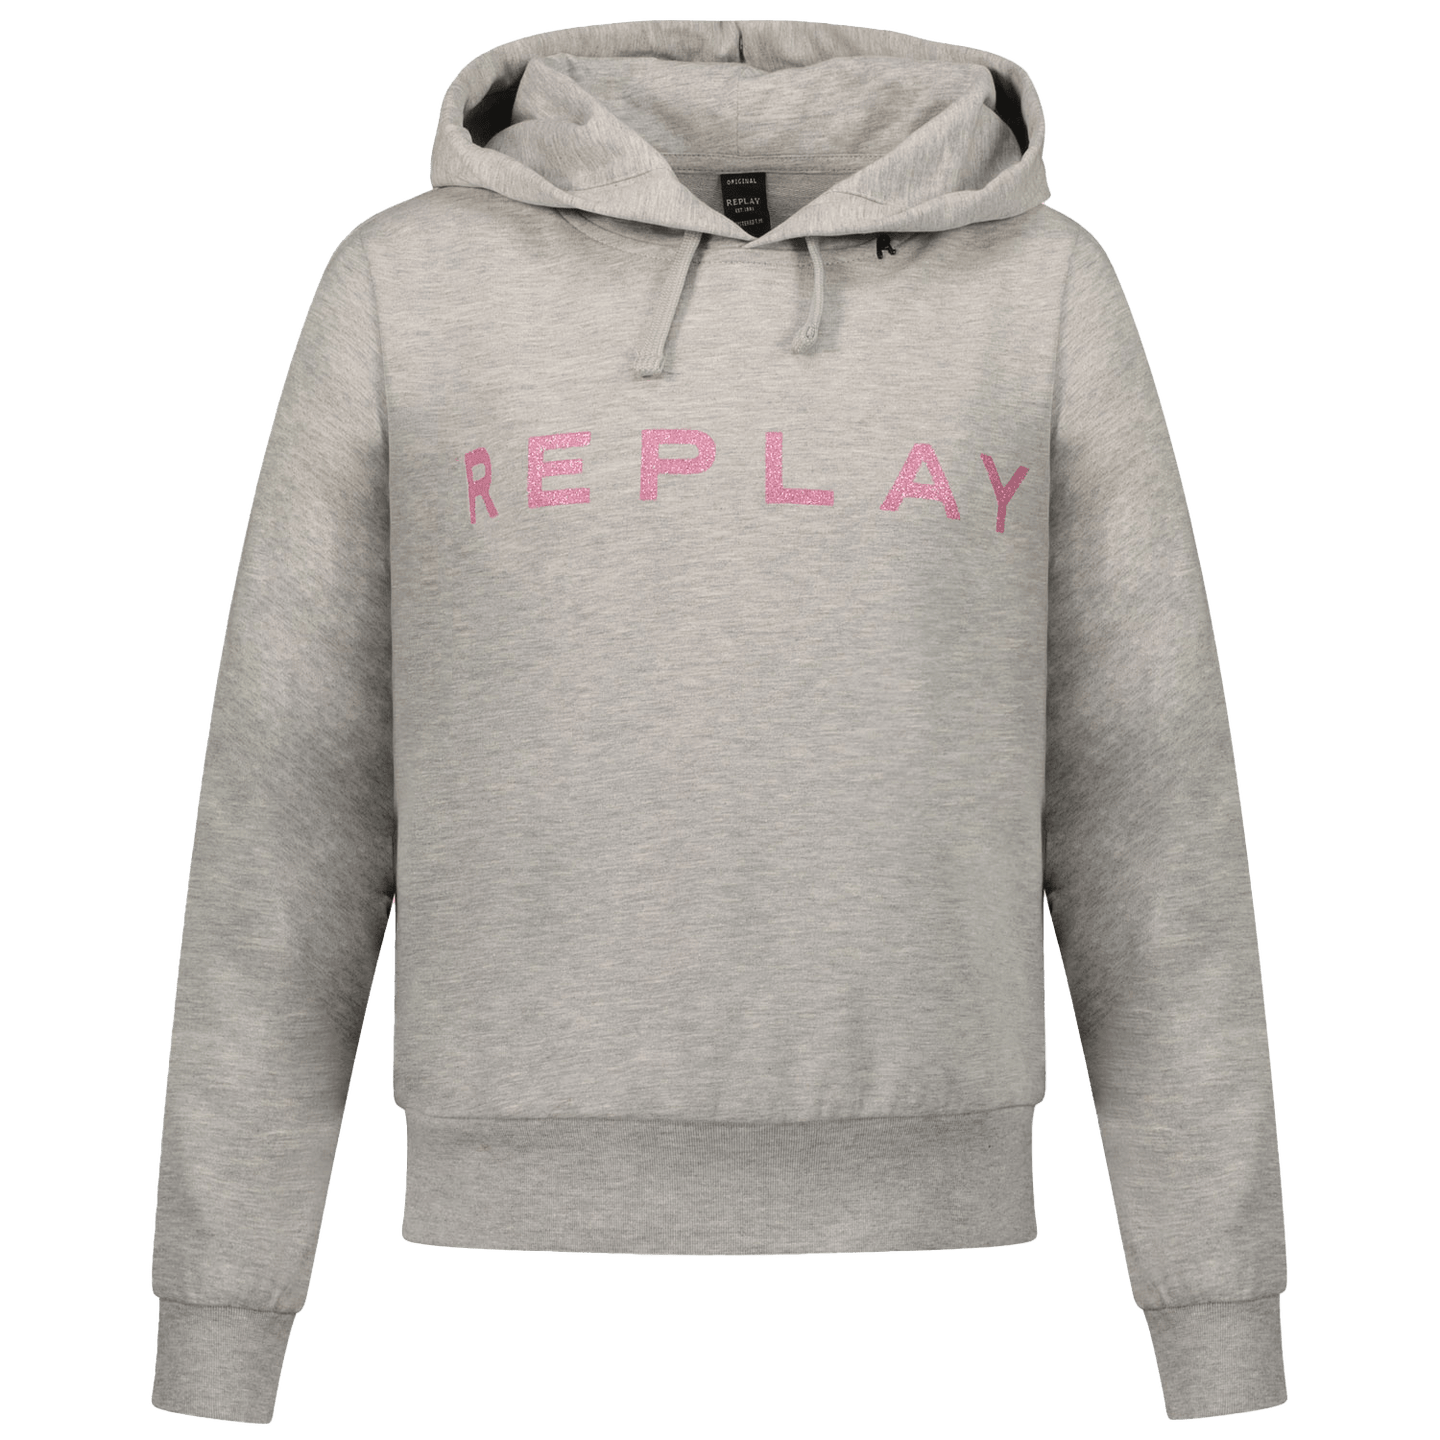 Replay Kids Girls Sweater Grey